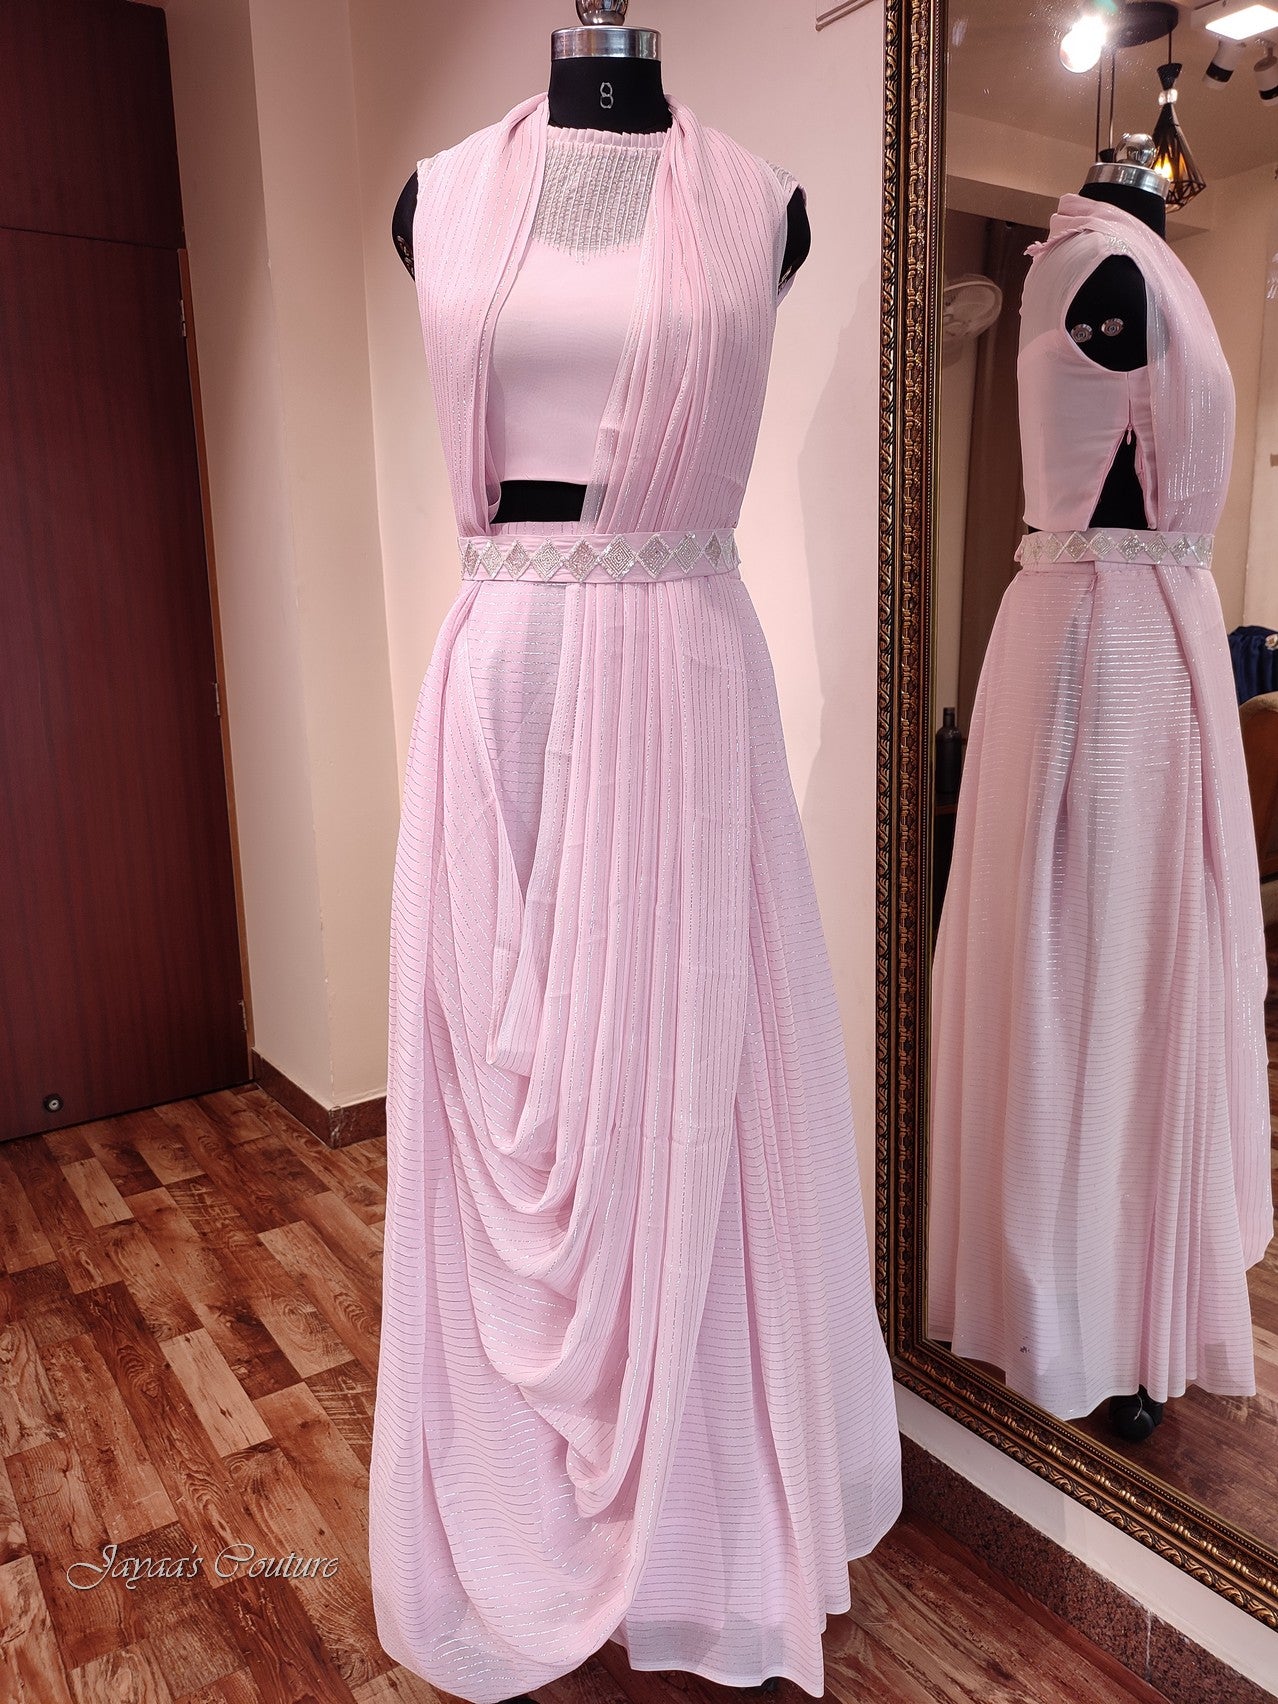 Light pink drape dress